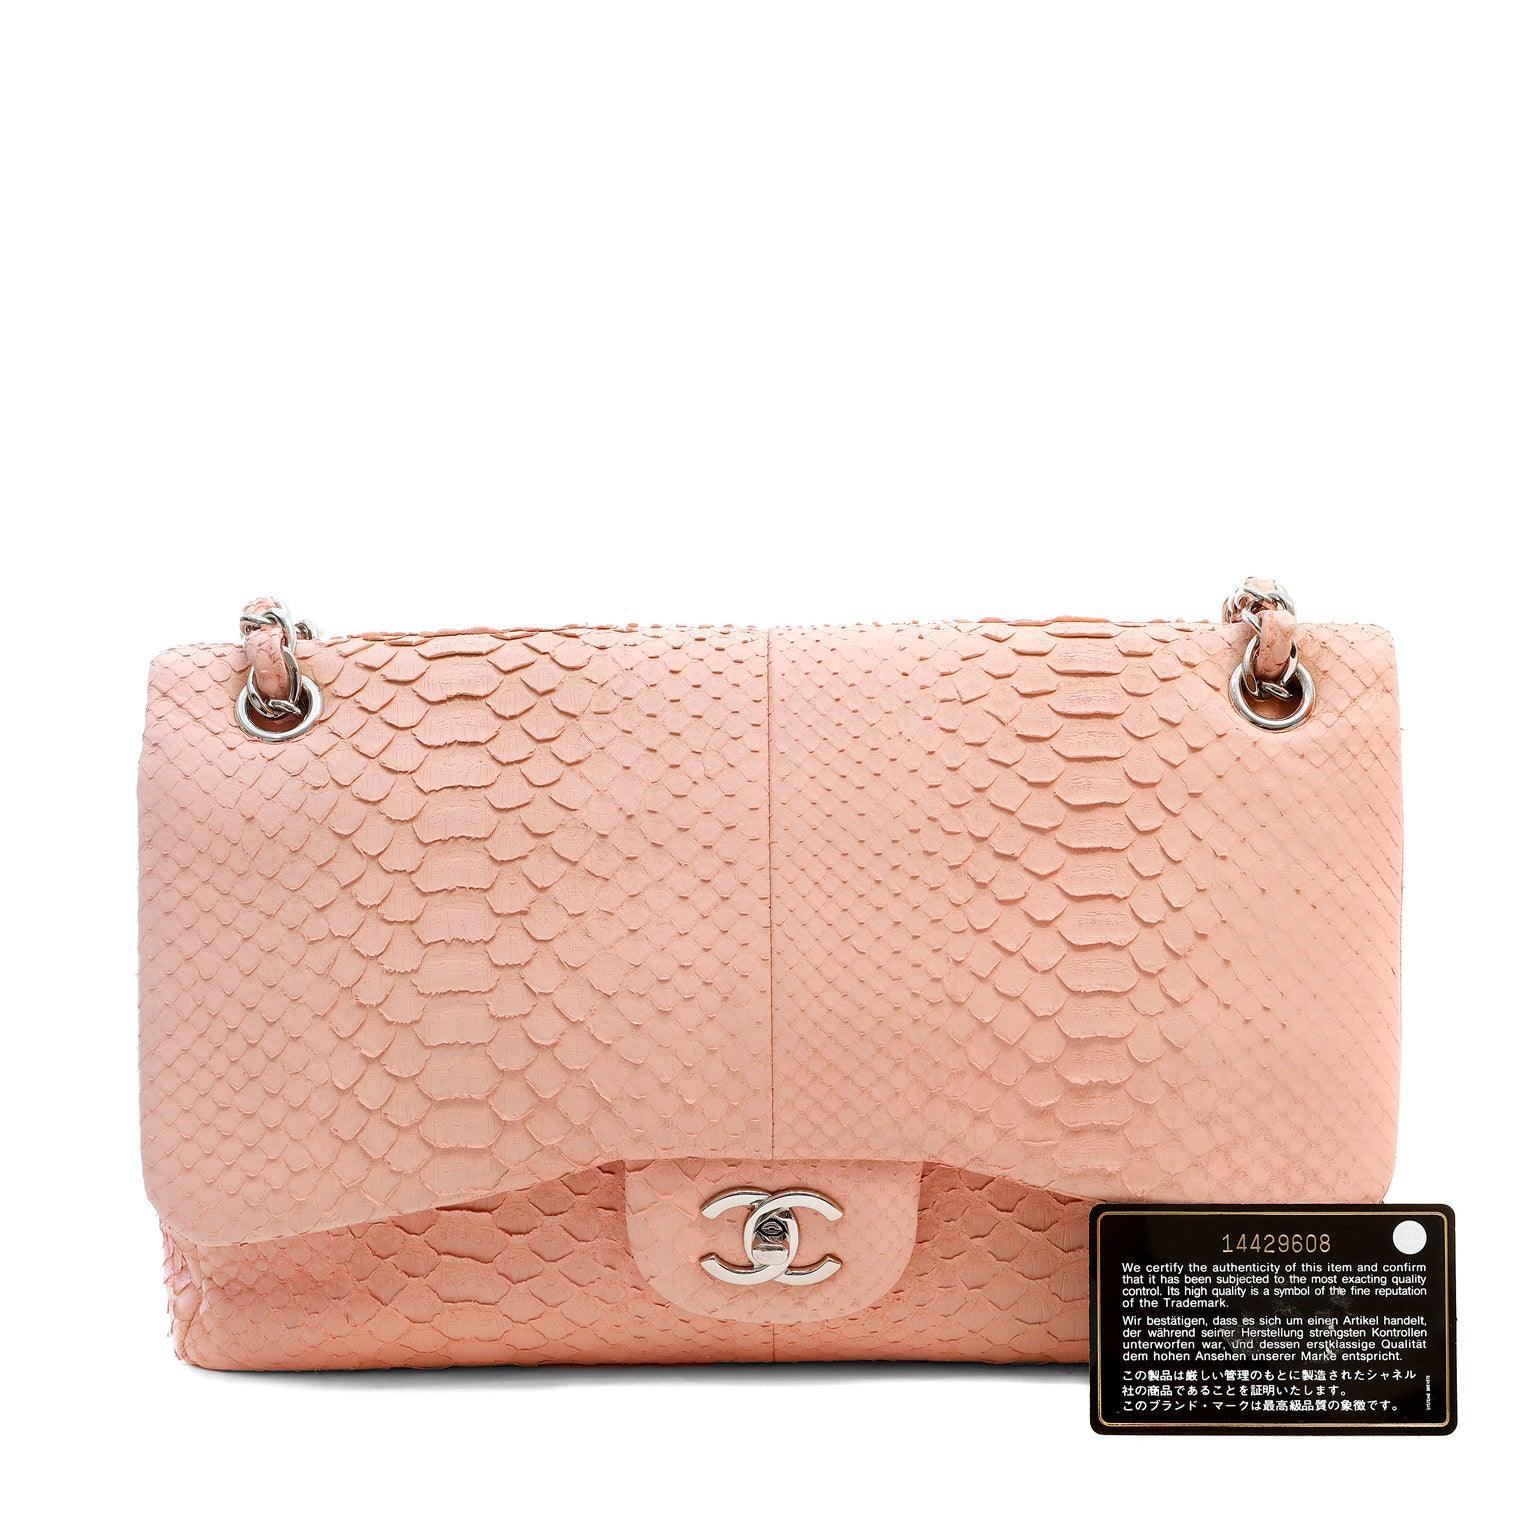 Get your hands on this stunning Chanel Bubblegum Pink Python Jumbo